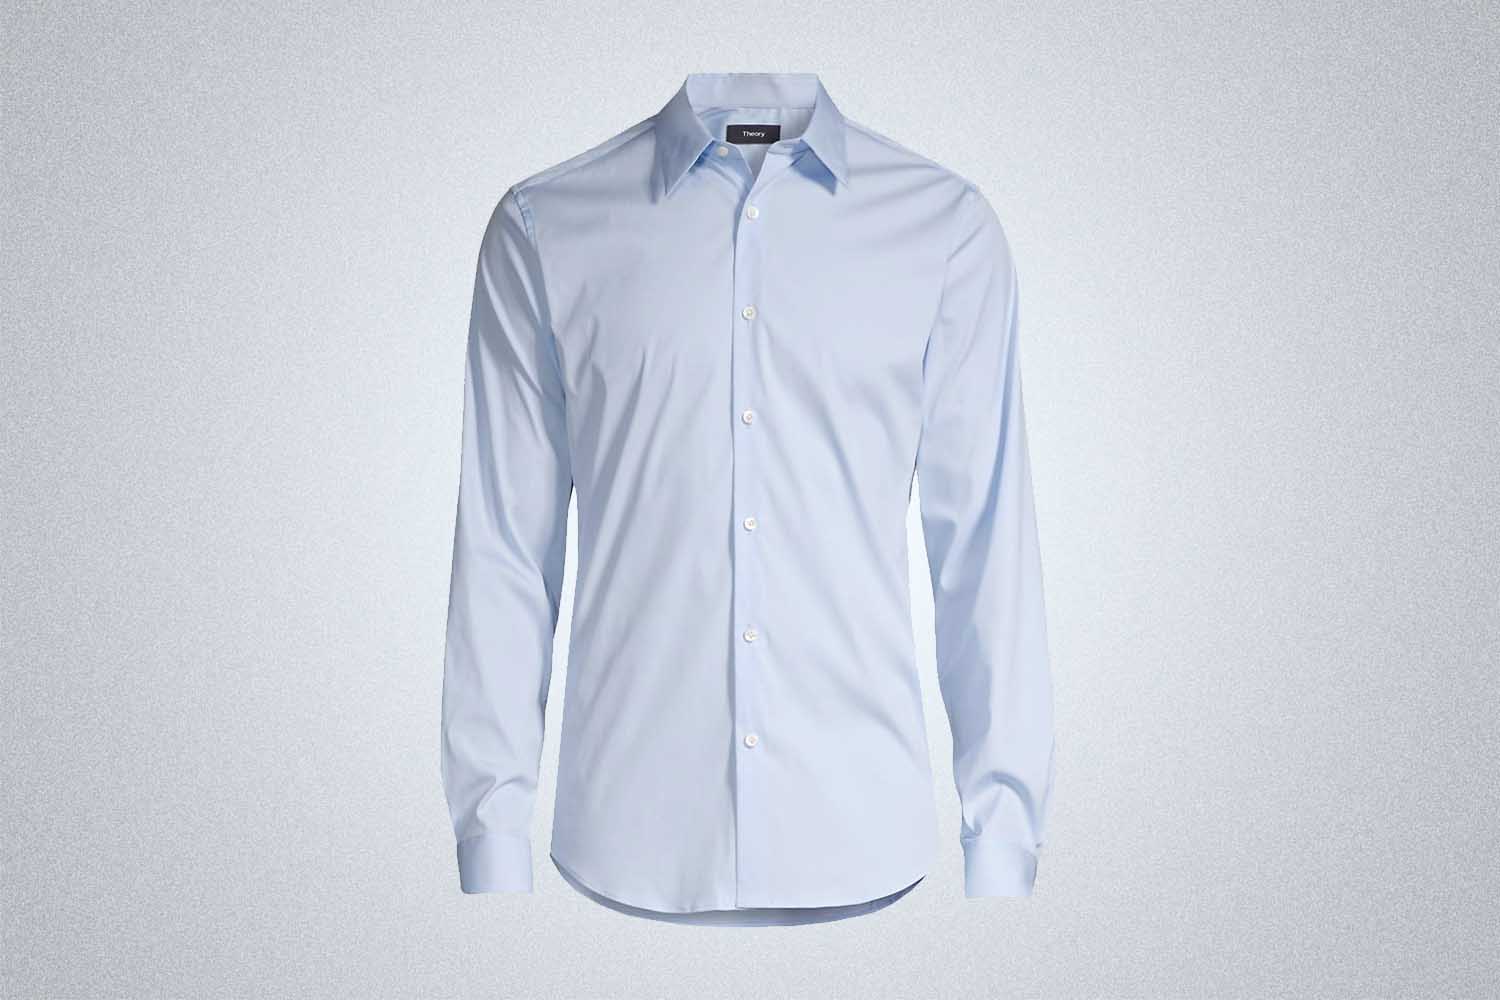 Theory Sylvain Wealth Poplin Long-Sleeve Shirt, now on sale